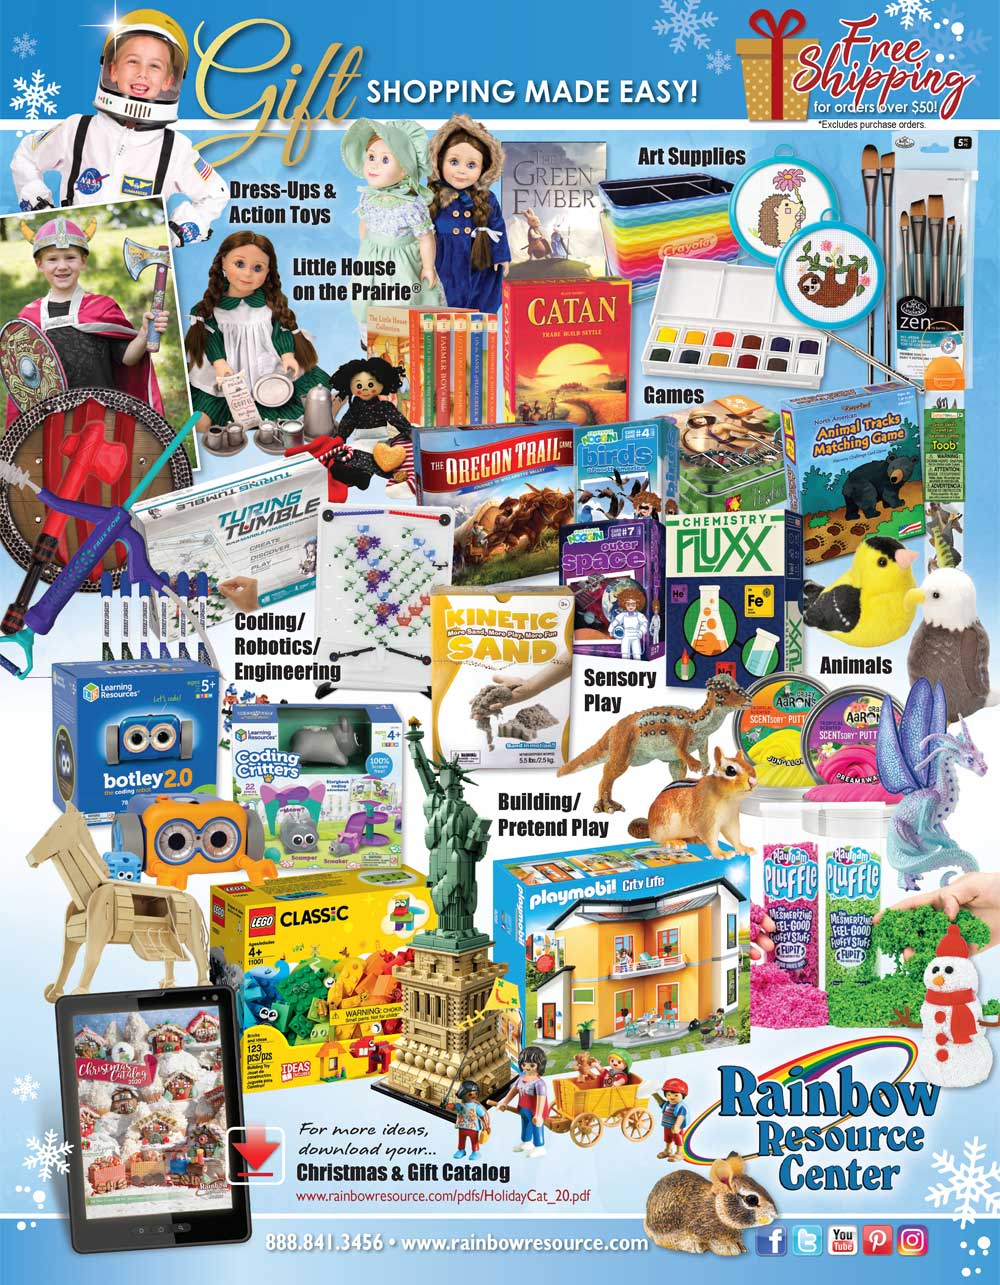 Rainbow Resource Center advertisement